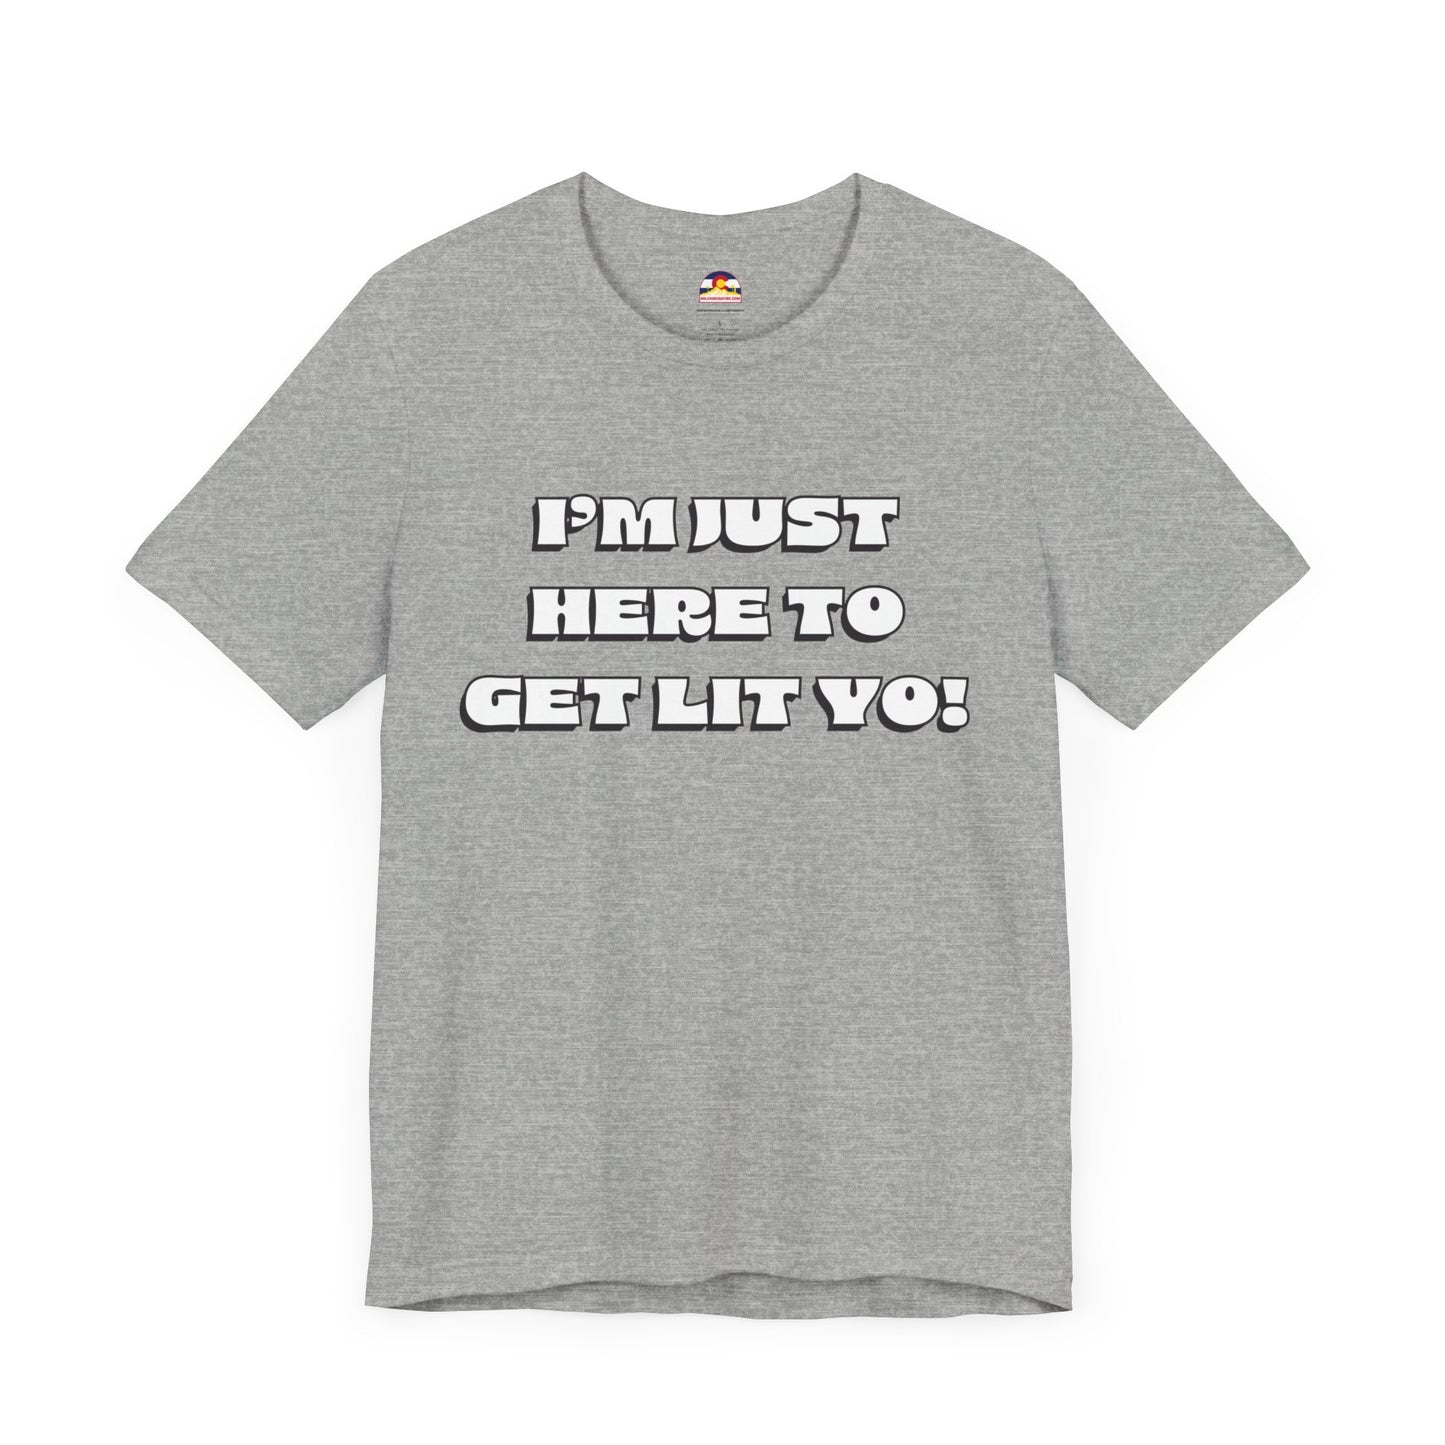 I'm Just Here To Get Lit Yo! T-Shirt